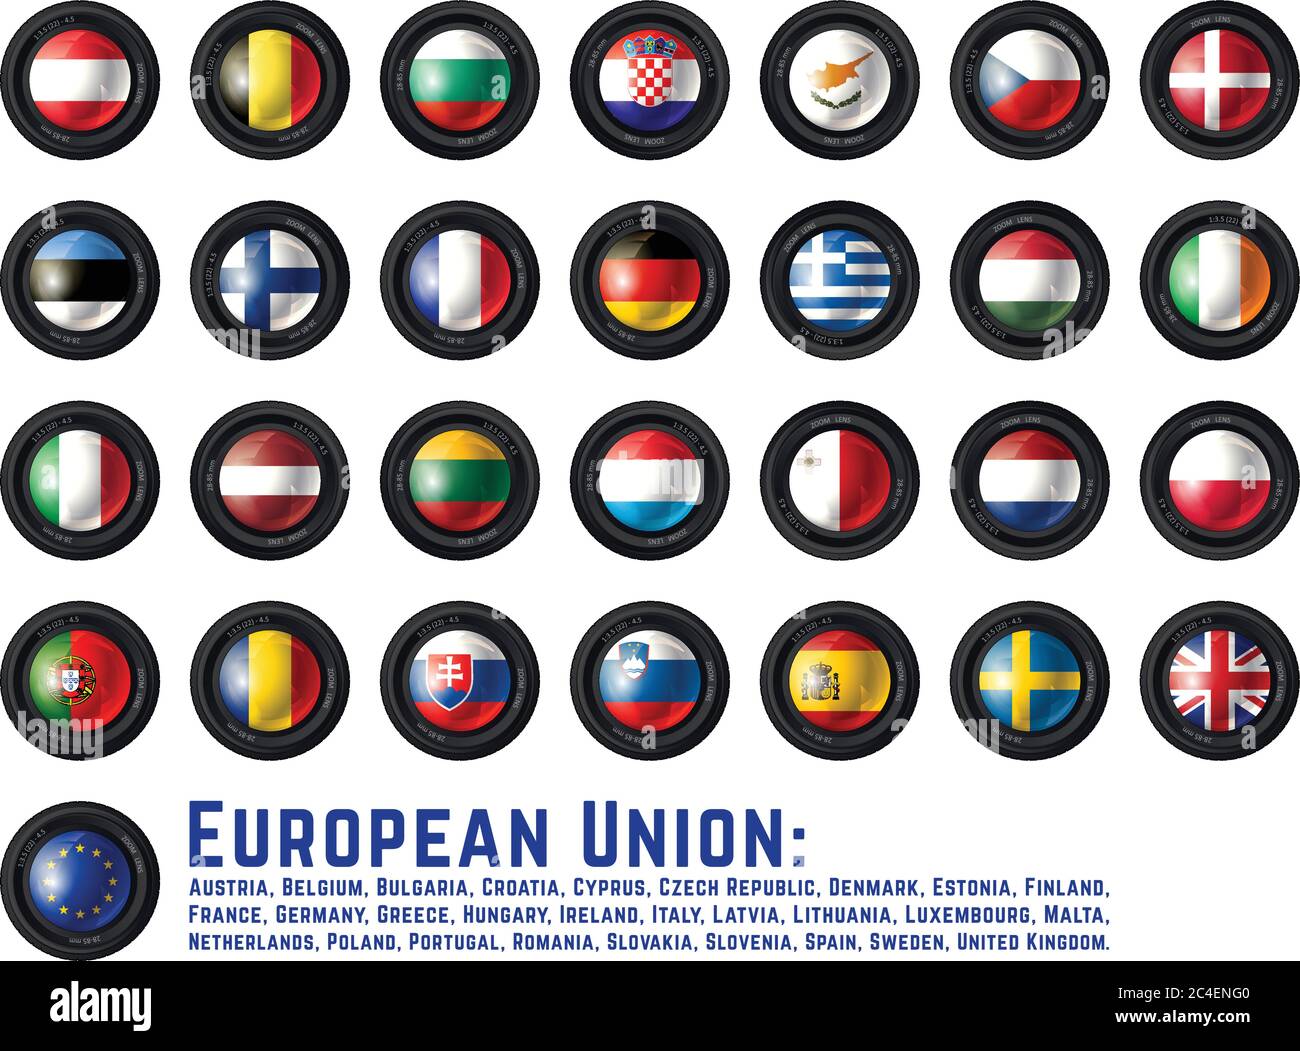 Set mit Kameraobjektiv mit Europischen Union Flaggen. Vektorgrafik. Stock Vektor